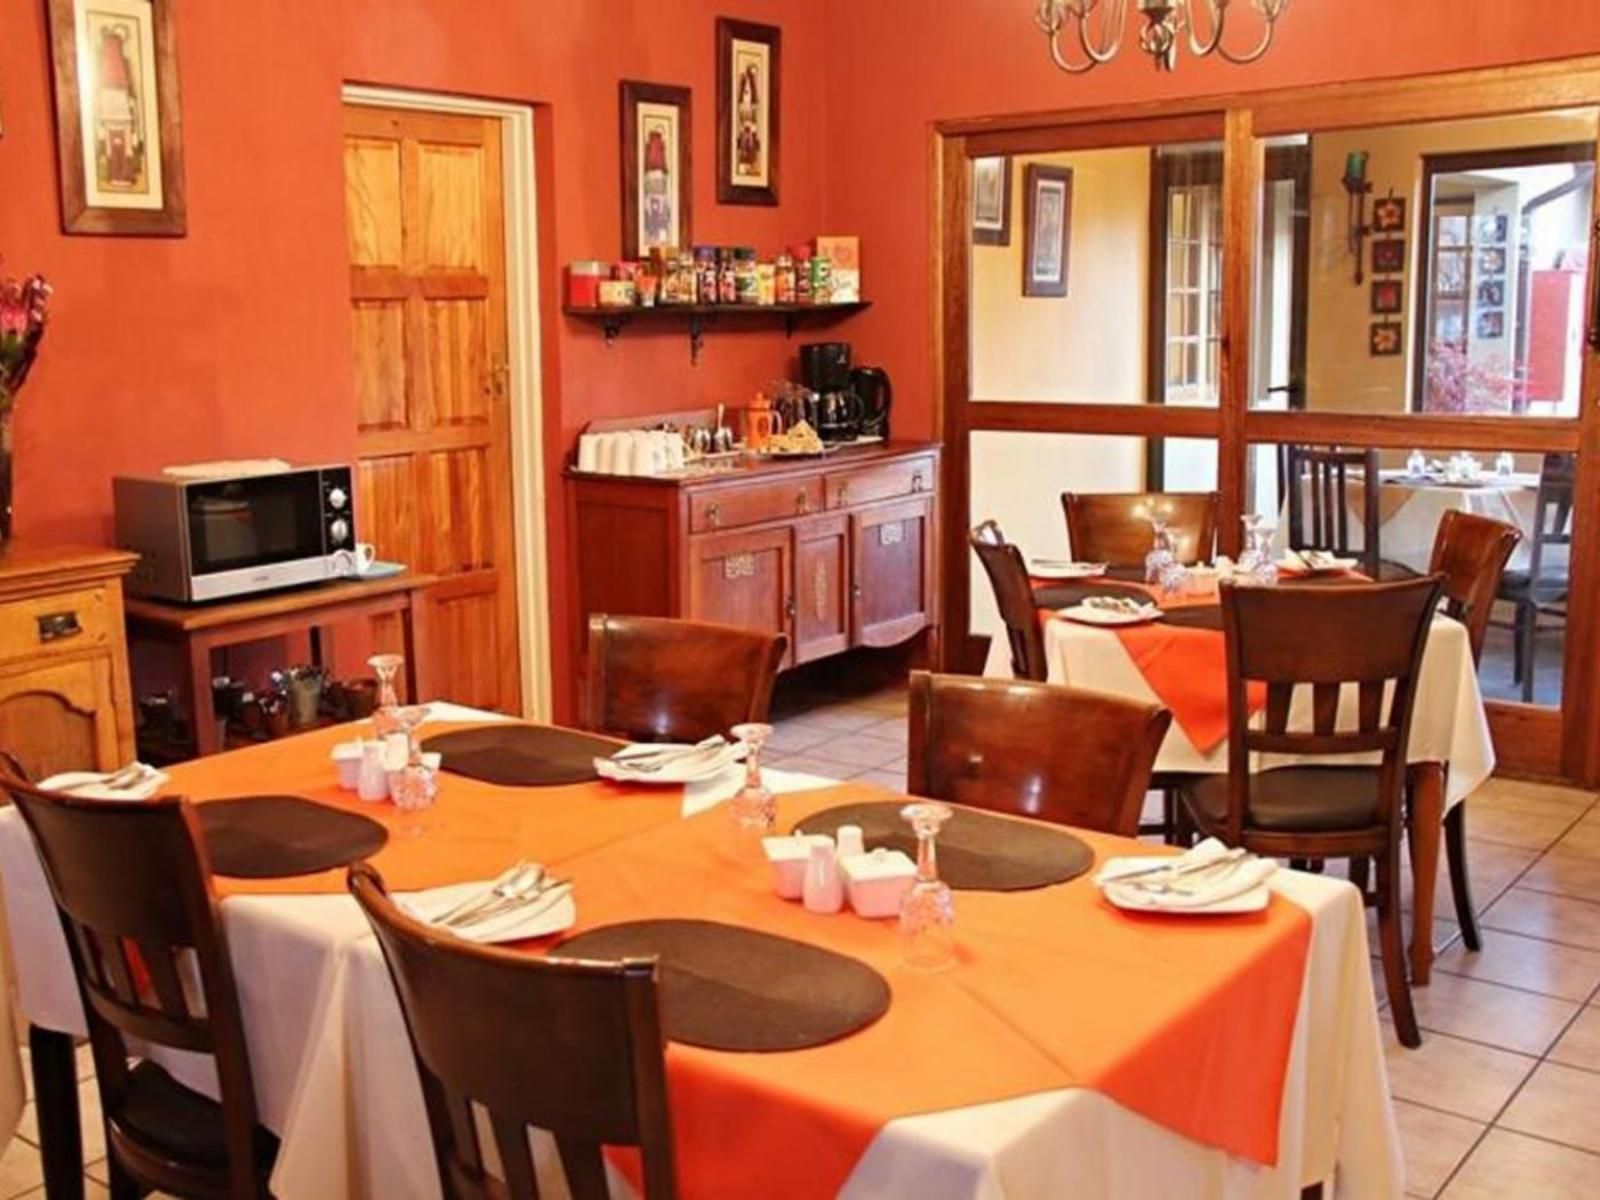 Greenleaf Guest Lodge Universitas Bloemfontein Free State South Africa Colorful, Restaurant, Bar